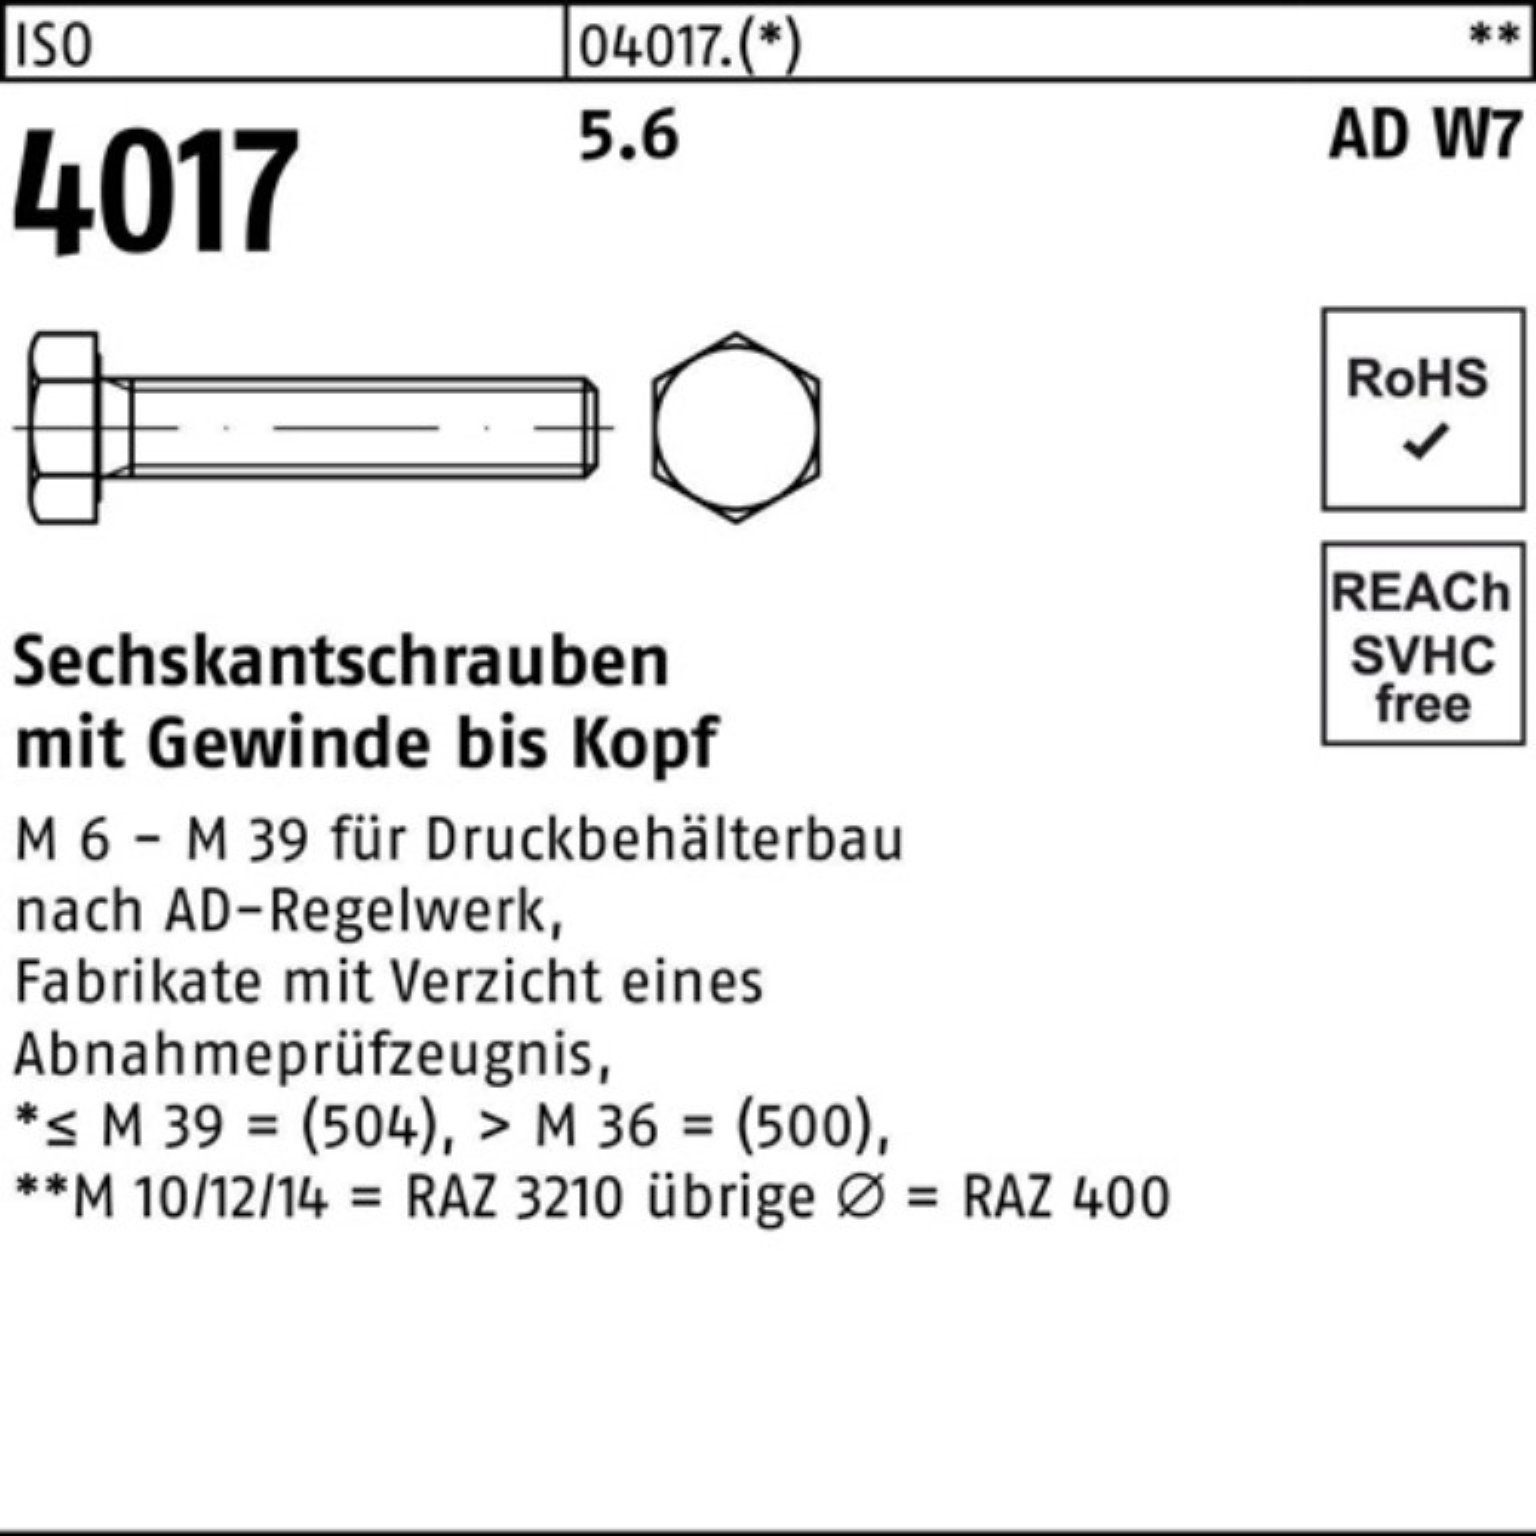 Bufab Sechskantschraube 100er Pack Sechskantschraube ISO 4017 VG M12x 50 5.6 AD W7 100 Stück